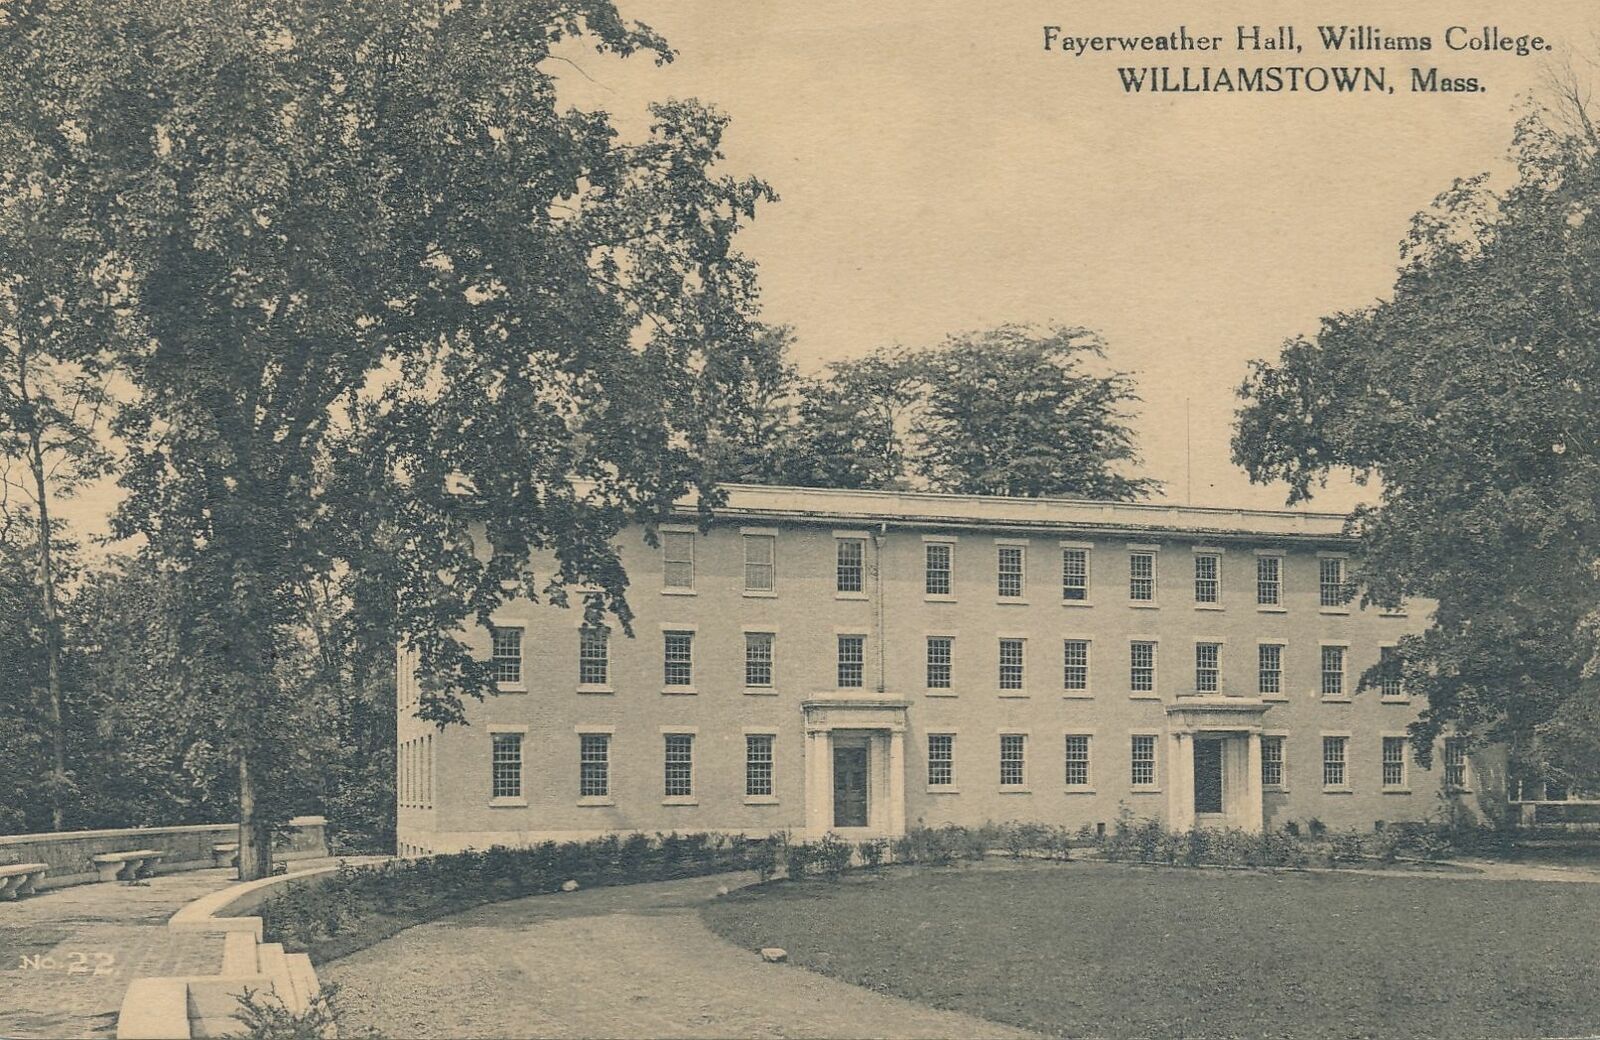 WILLIAMSTOWN MA - Williams College Fayerweather Hall